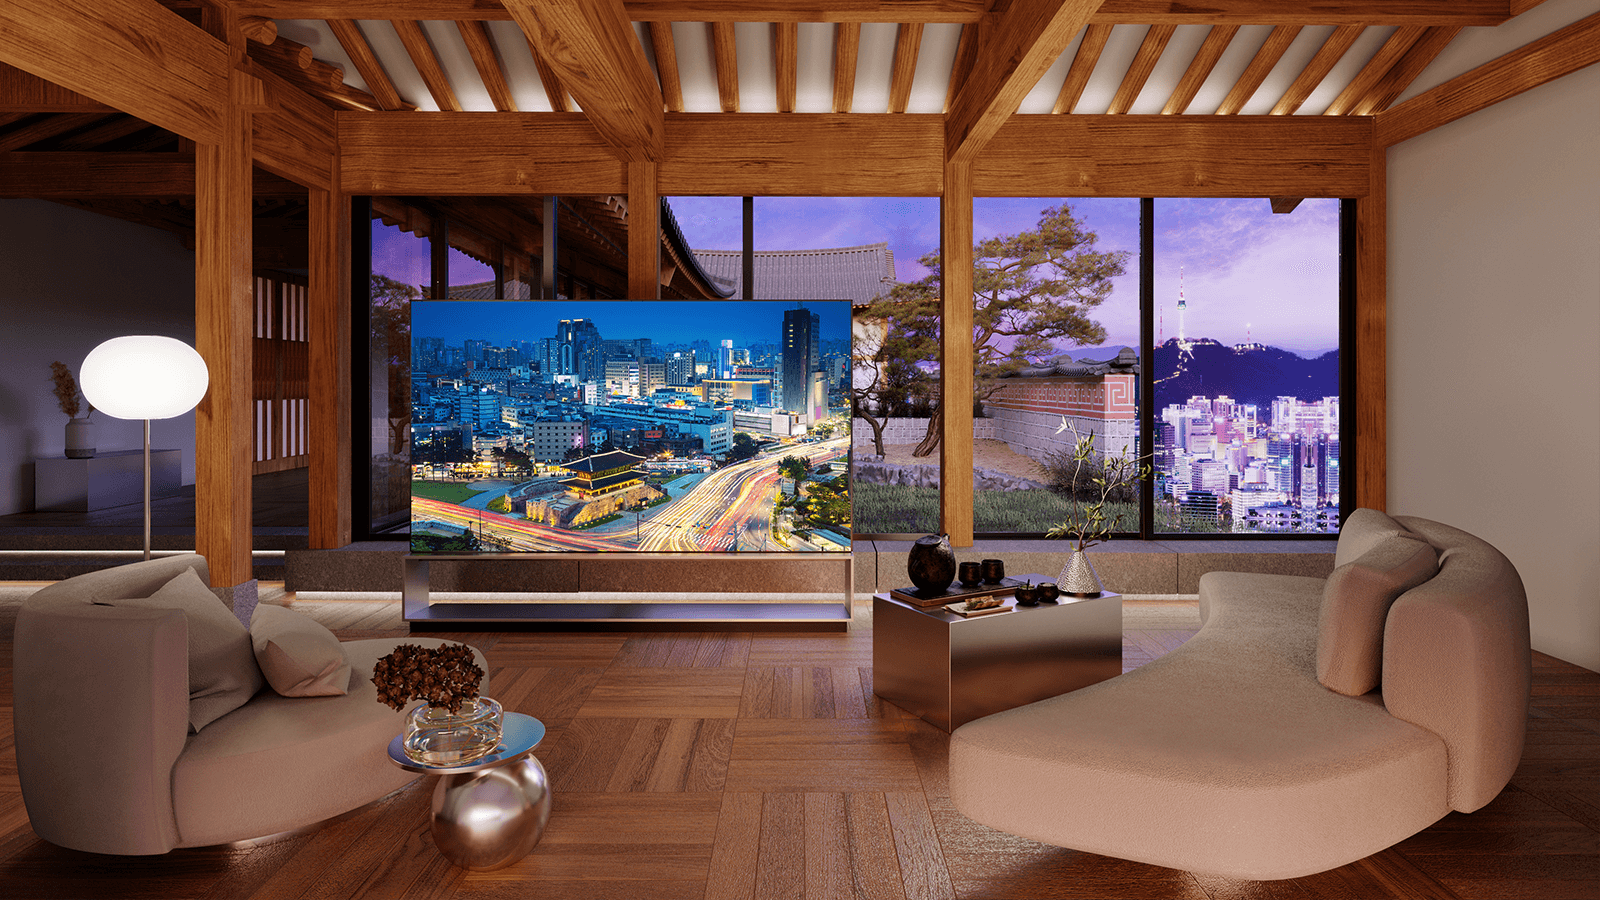 LG Signature TV in a 3D Virtual Space